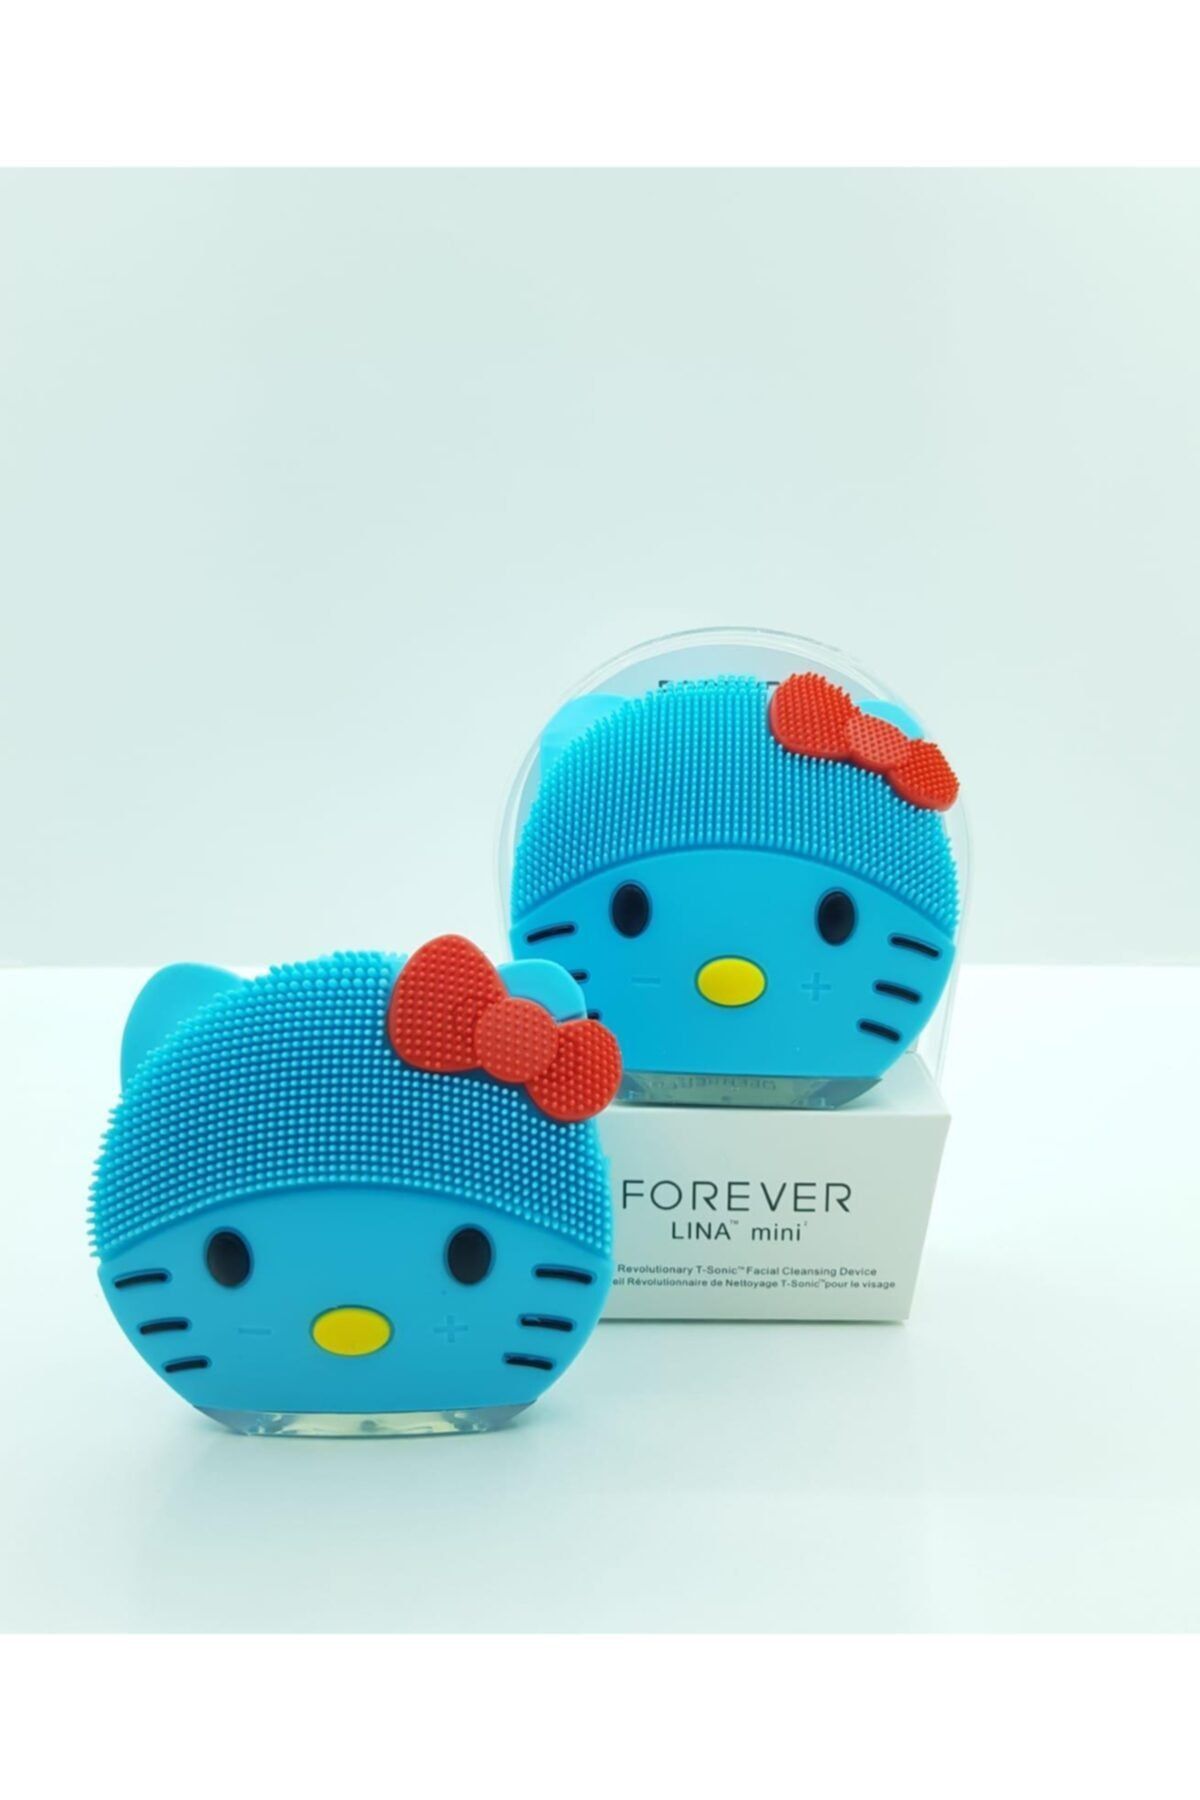 Forever Hello Kitty Resimli Cilt Temizleme Cihazı Ve Masaj Aleti